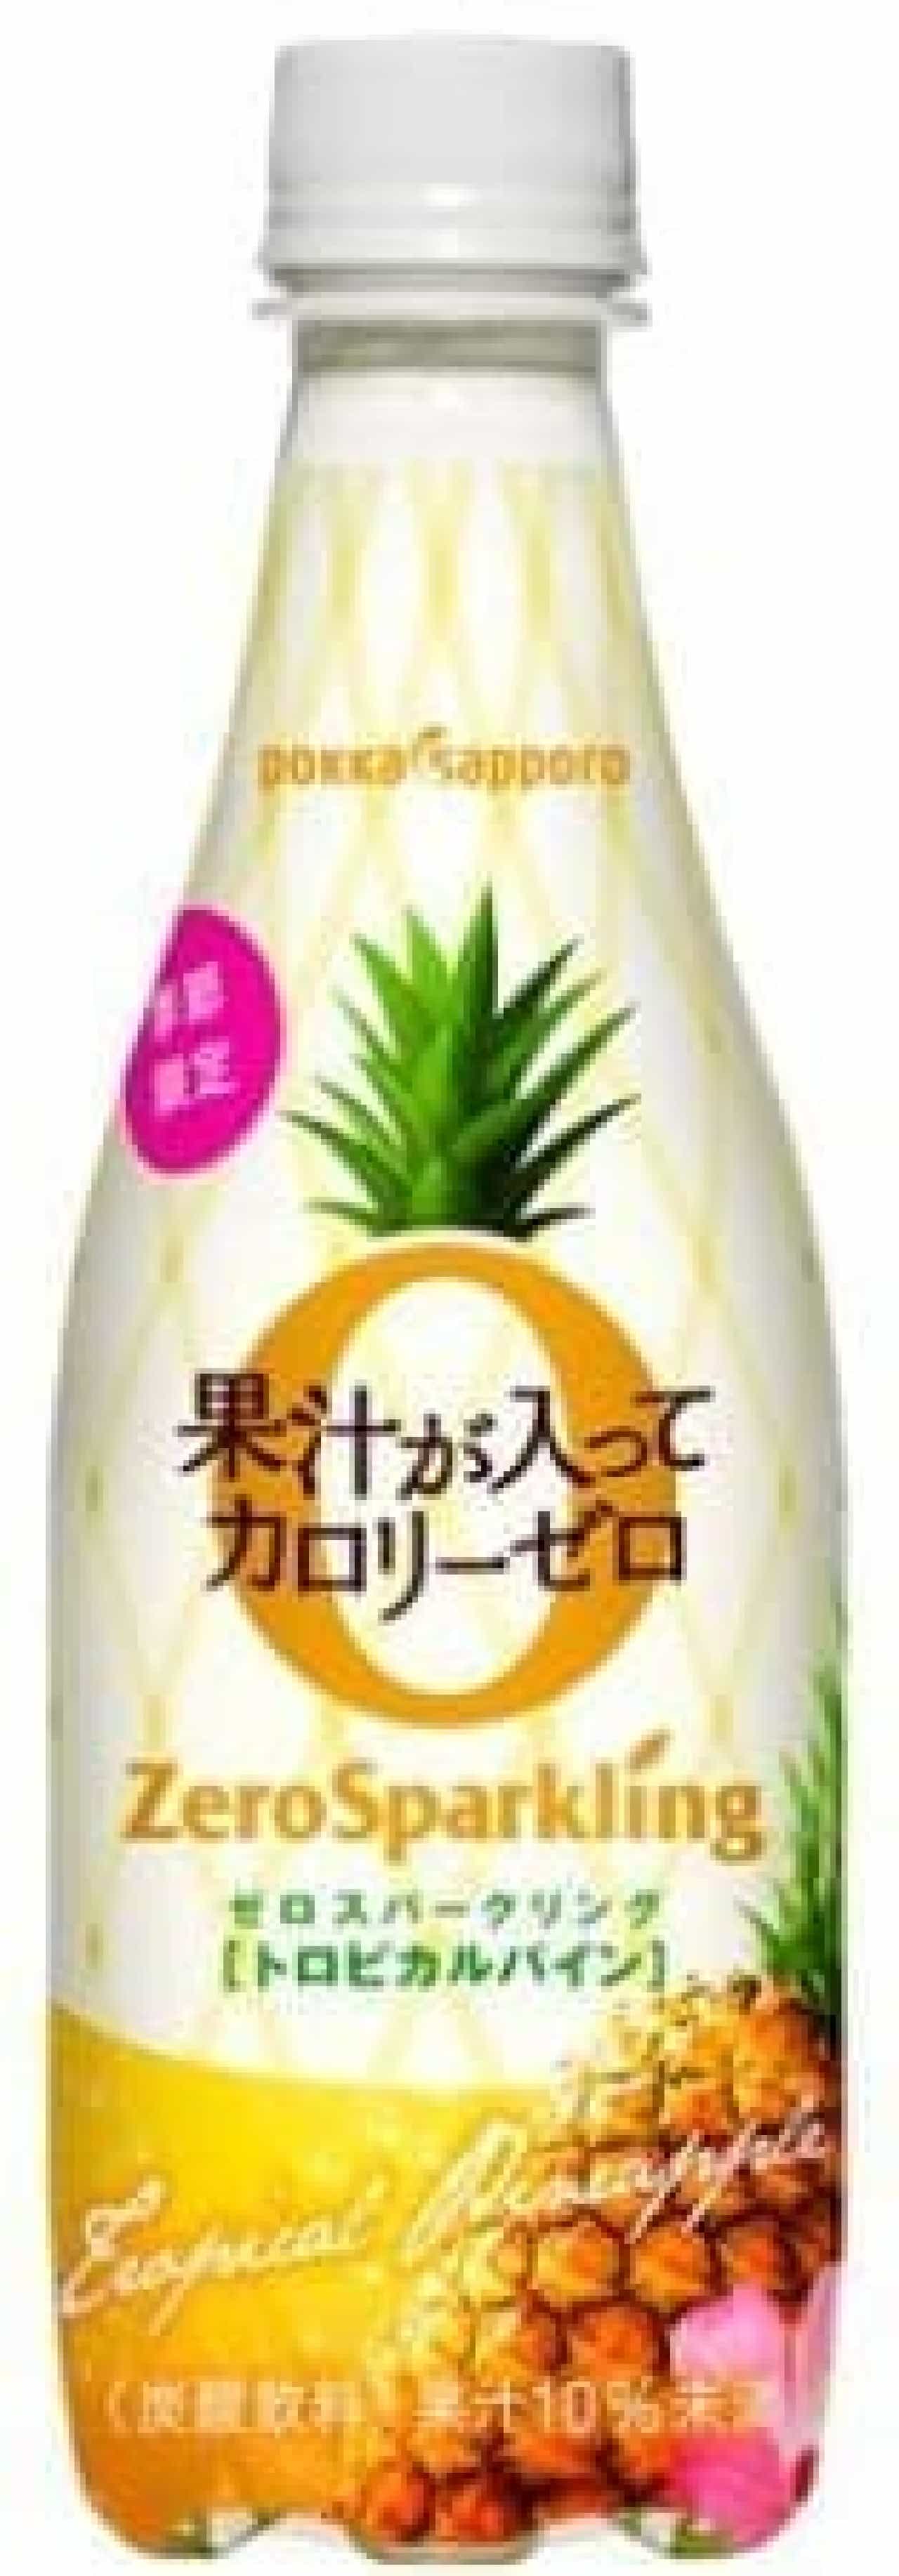 Contains fruit juice and has zero calories!